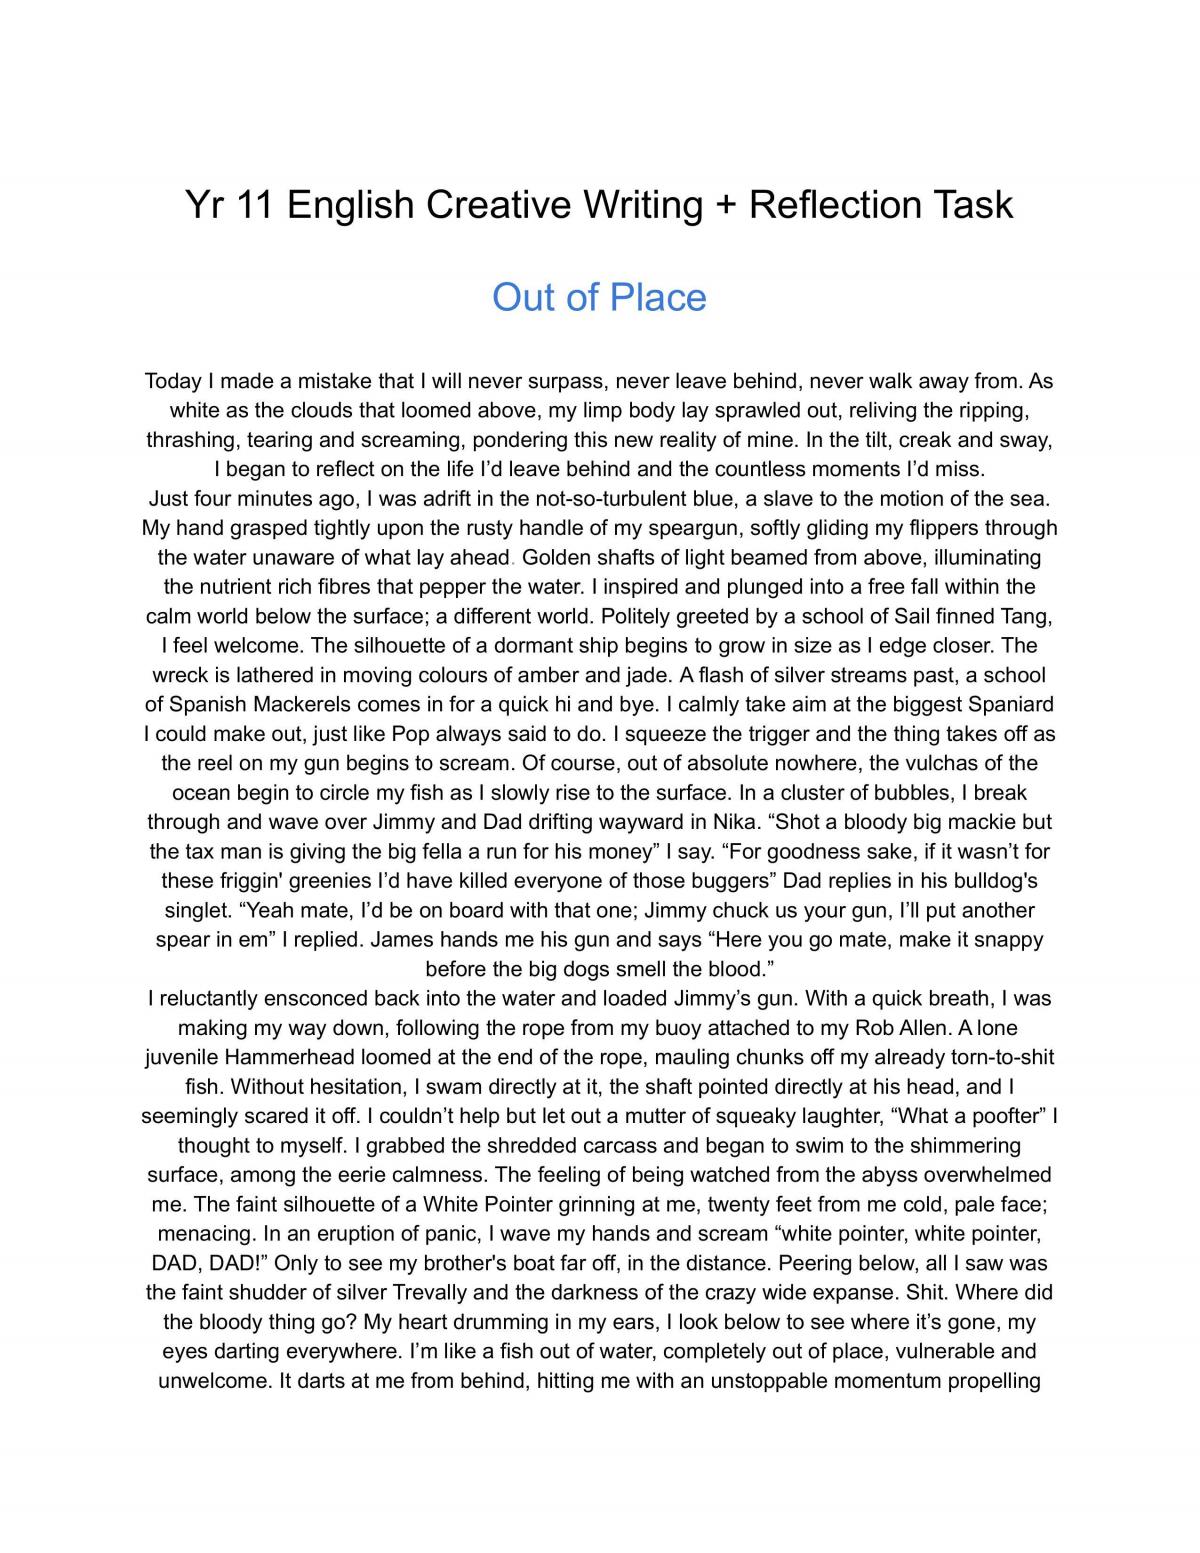 creative writing reflection example